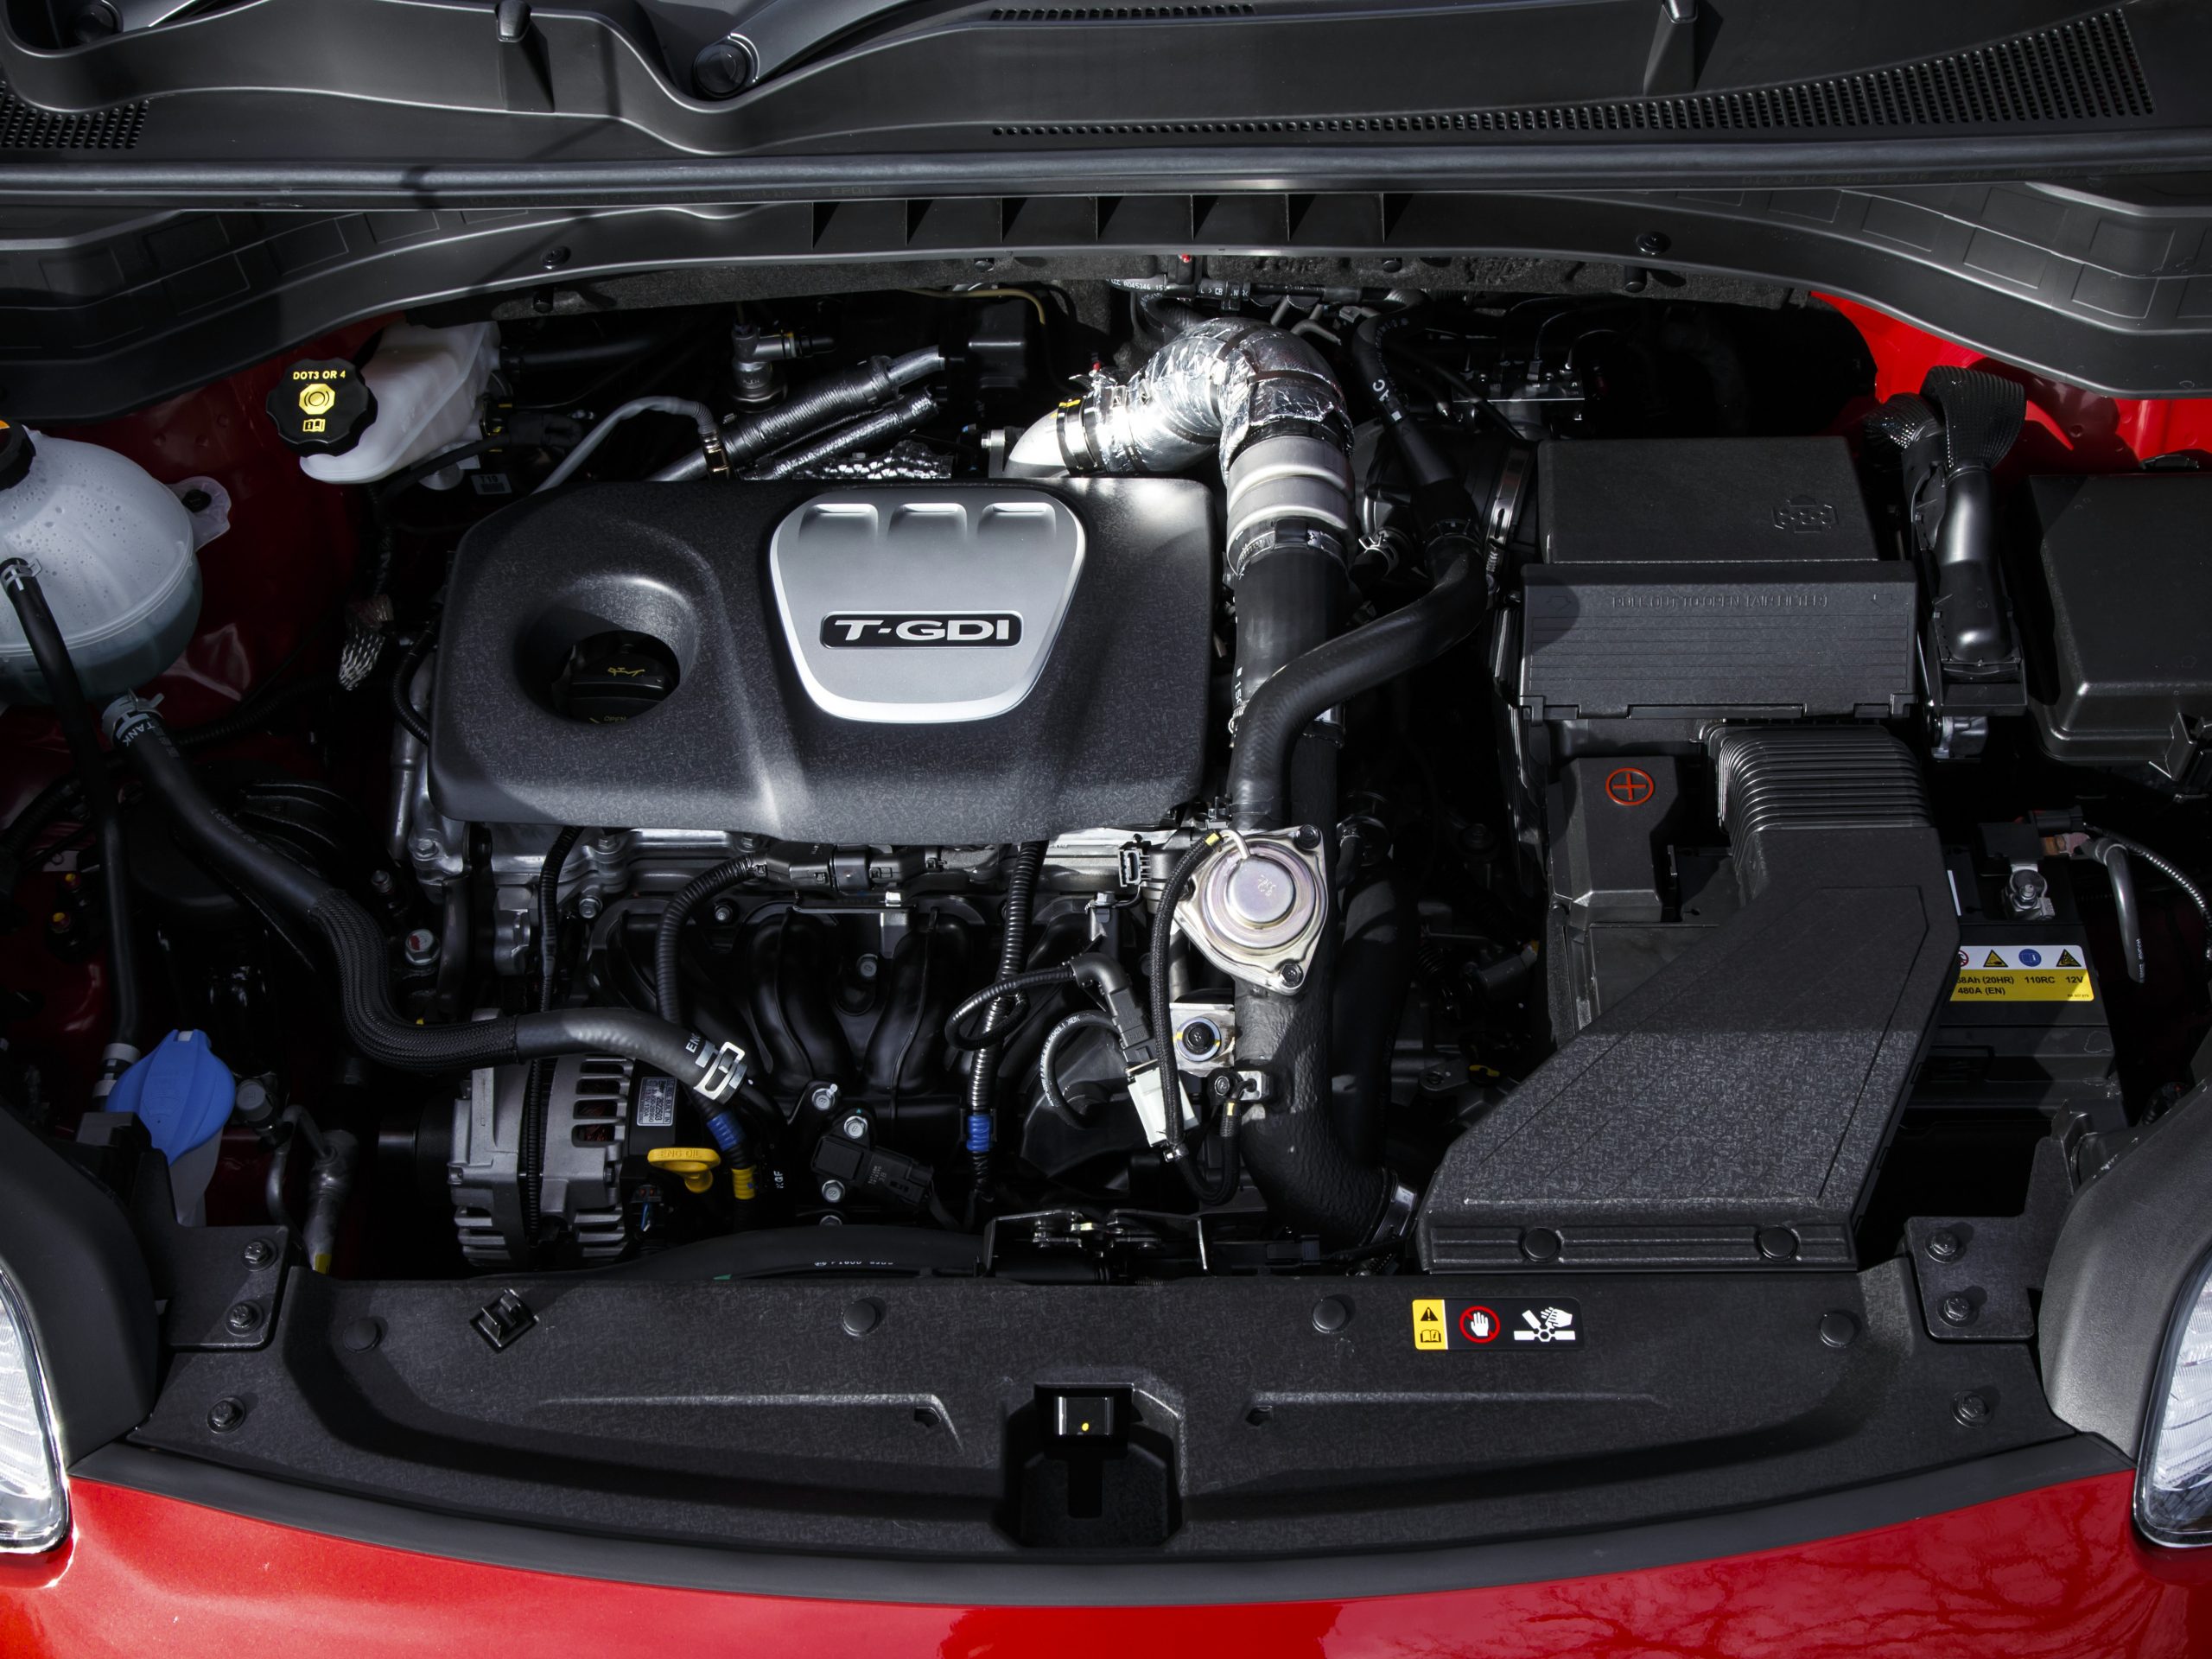 Кия спортейдж какой двигатель. Двигатель Киа Спортейдж 3. Kia Sportage 3 моторы. Двигатель Киа соул 1.6 дизель. Киа Спортейдж 2015 двигатель.